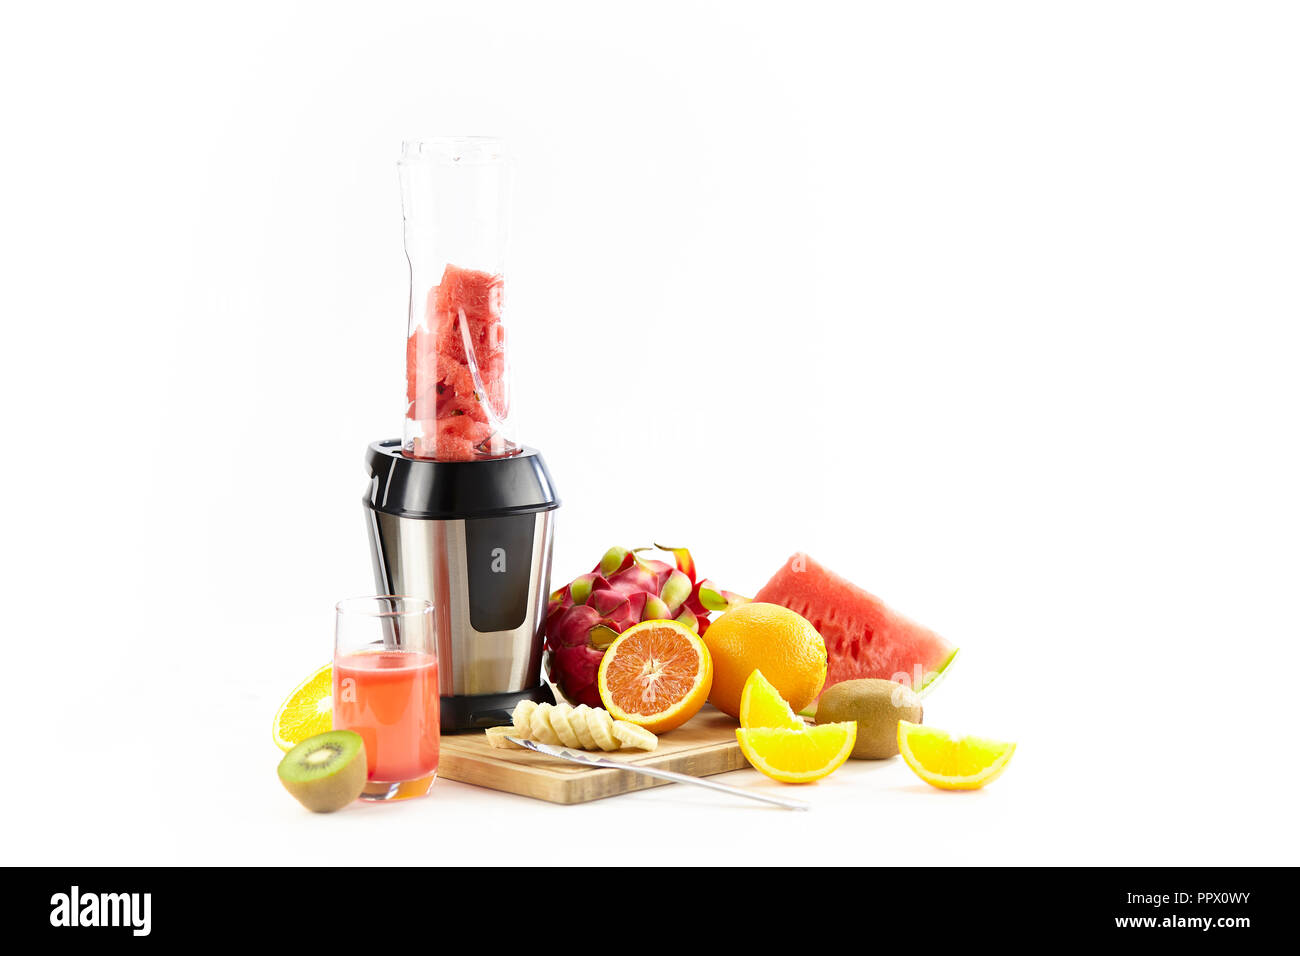 fruits, juice and blender isolated on white background. Stock Photo